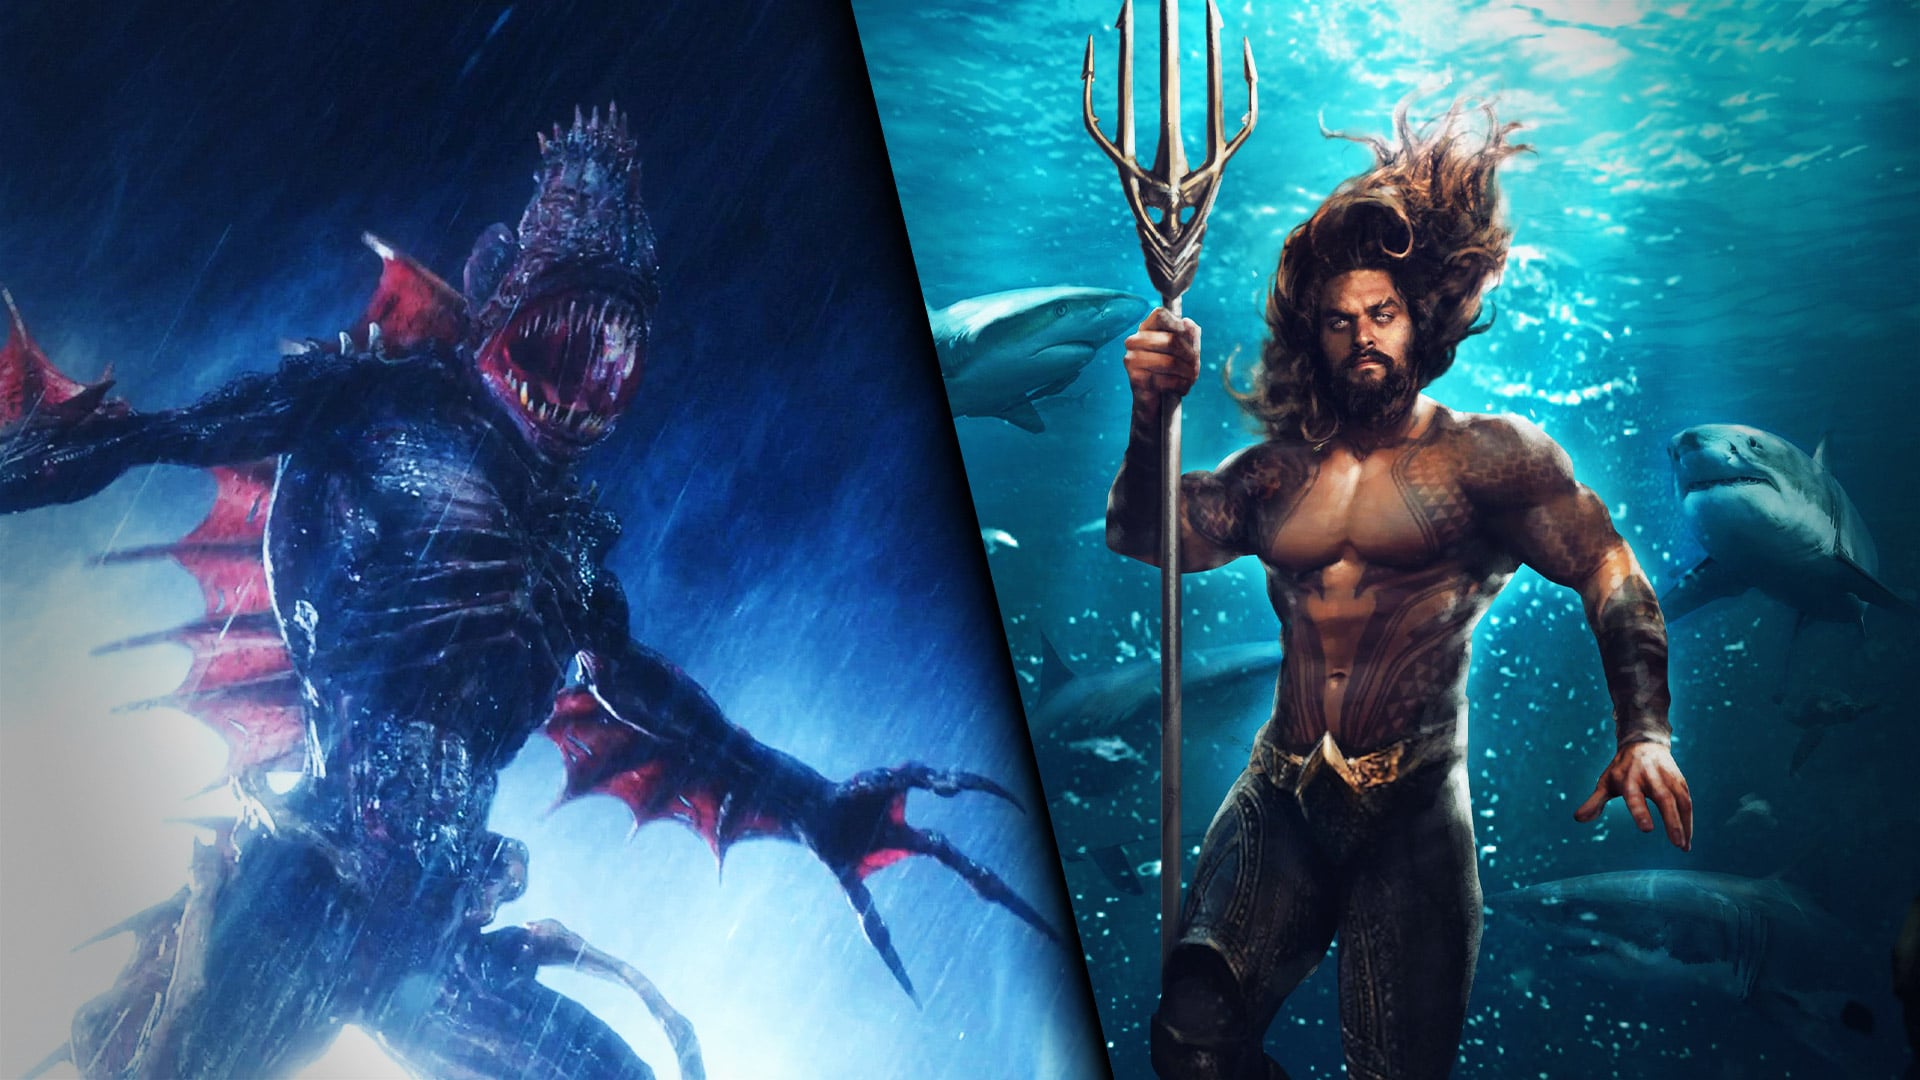 Aquaman 2 Director James Wan reveals the movie will have Horror Scenes